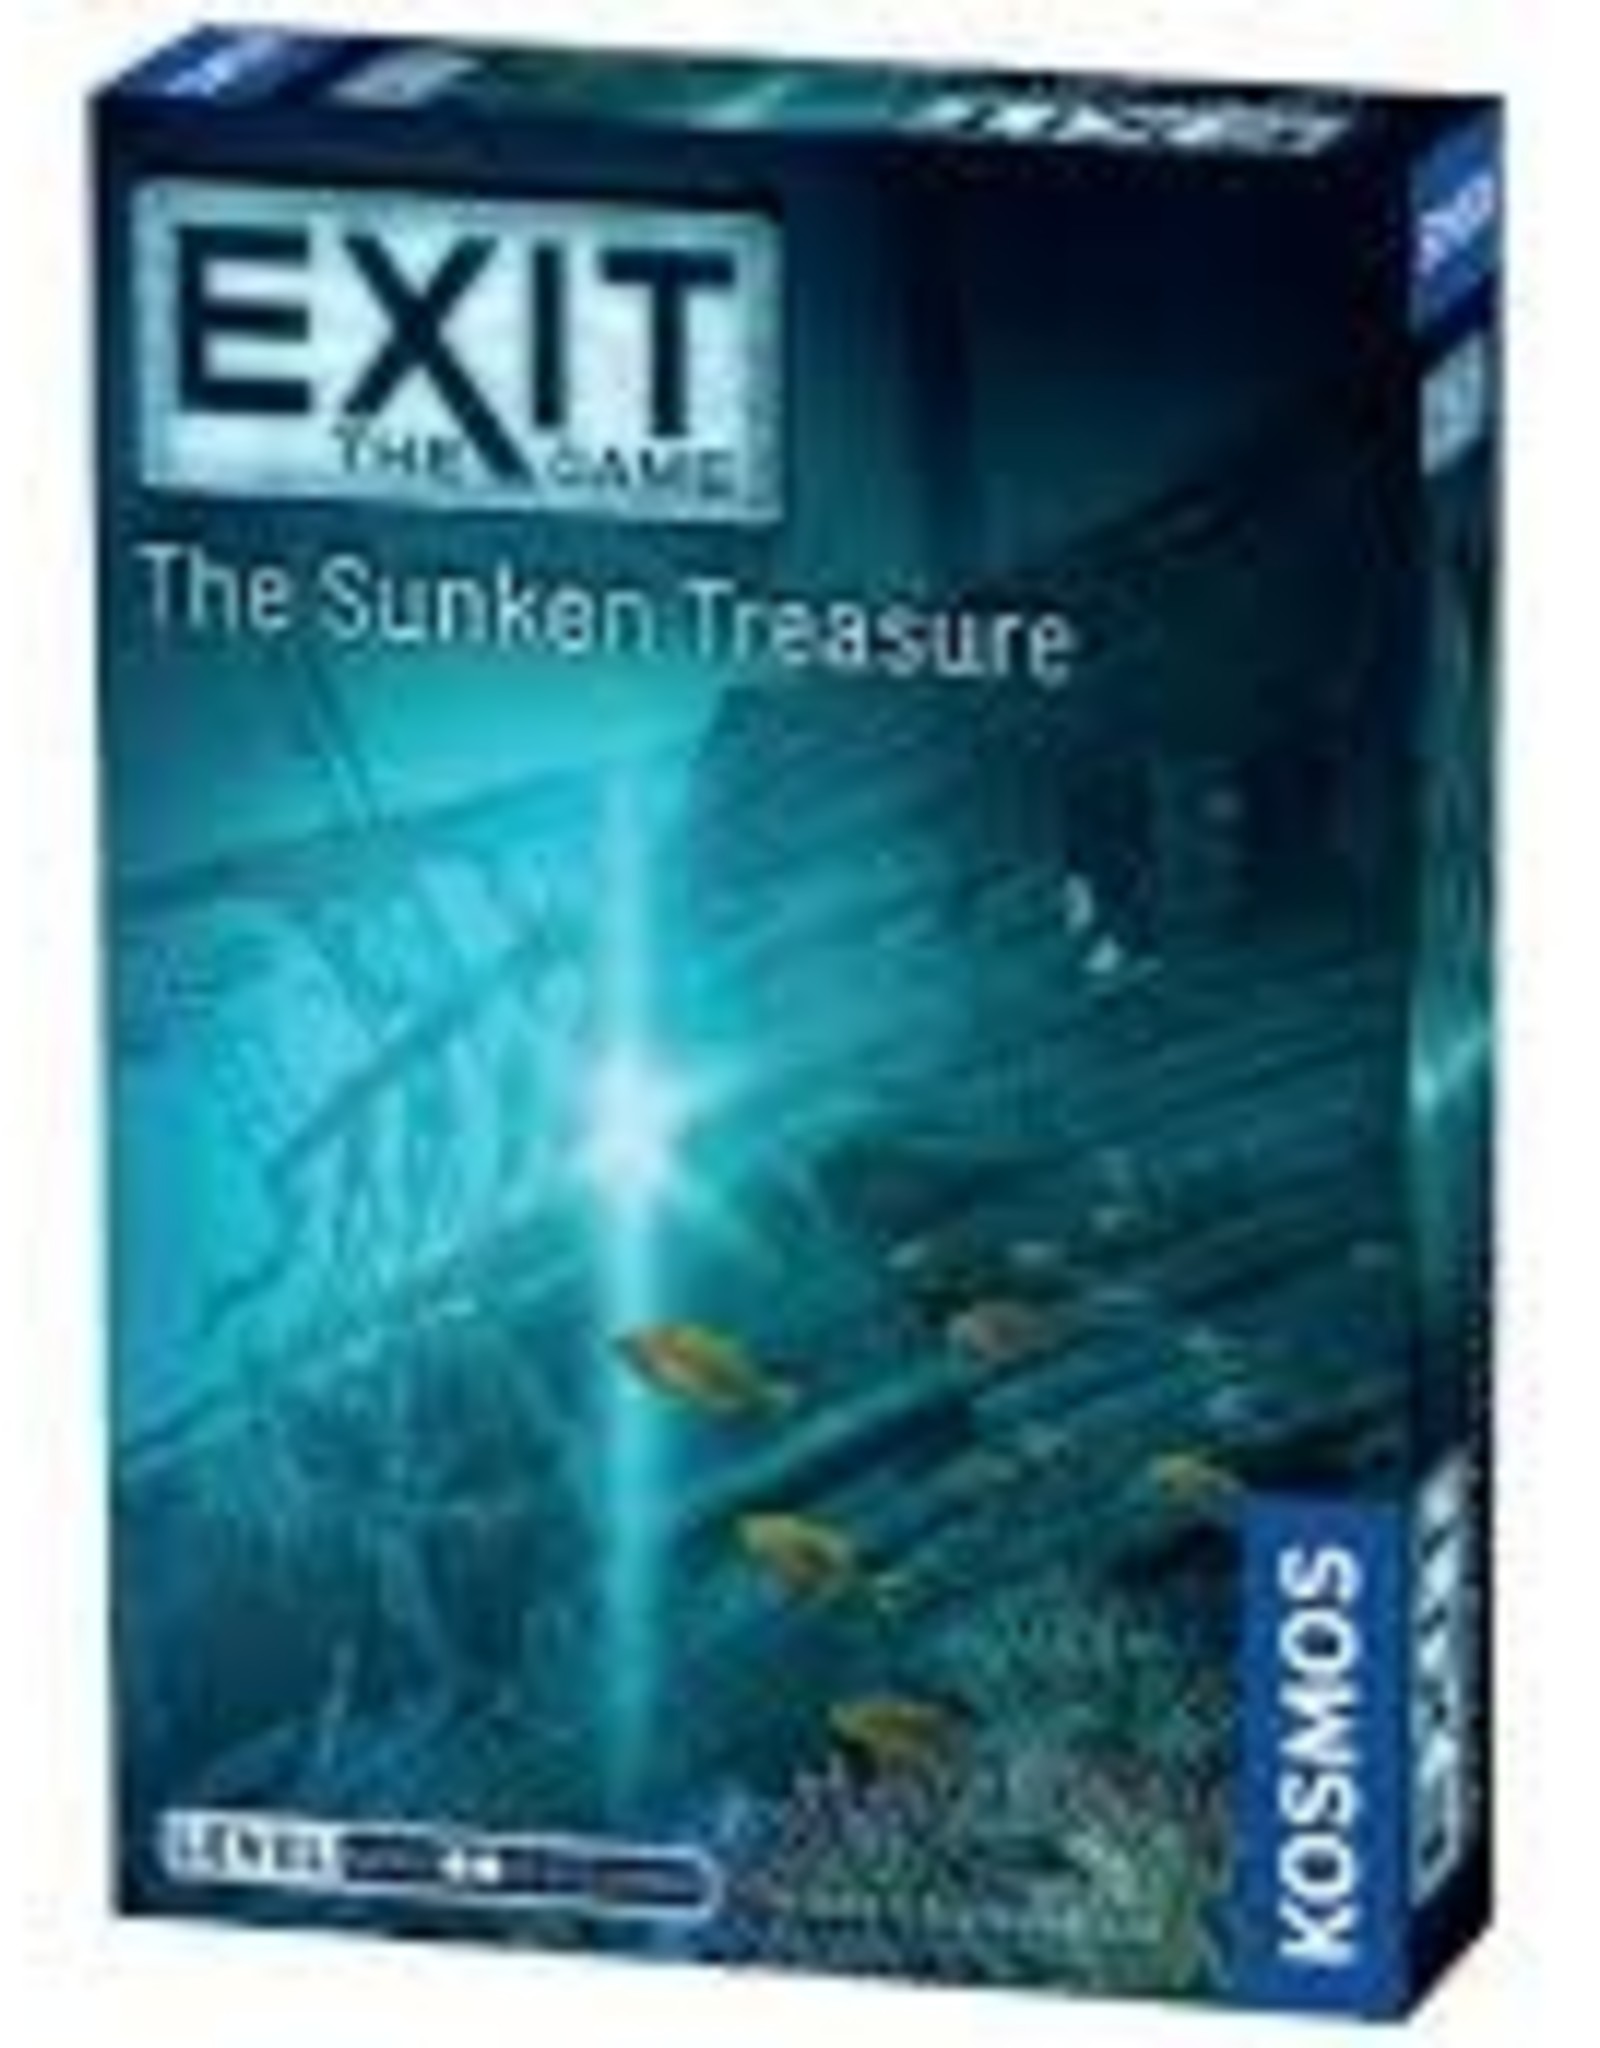 Thames & Kosmos EXIT - The Sunken Treasure